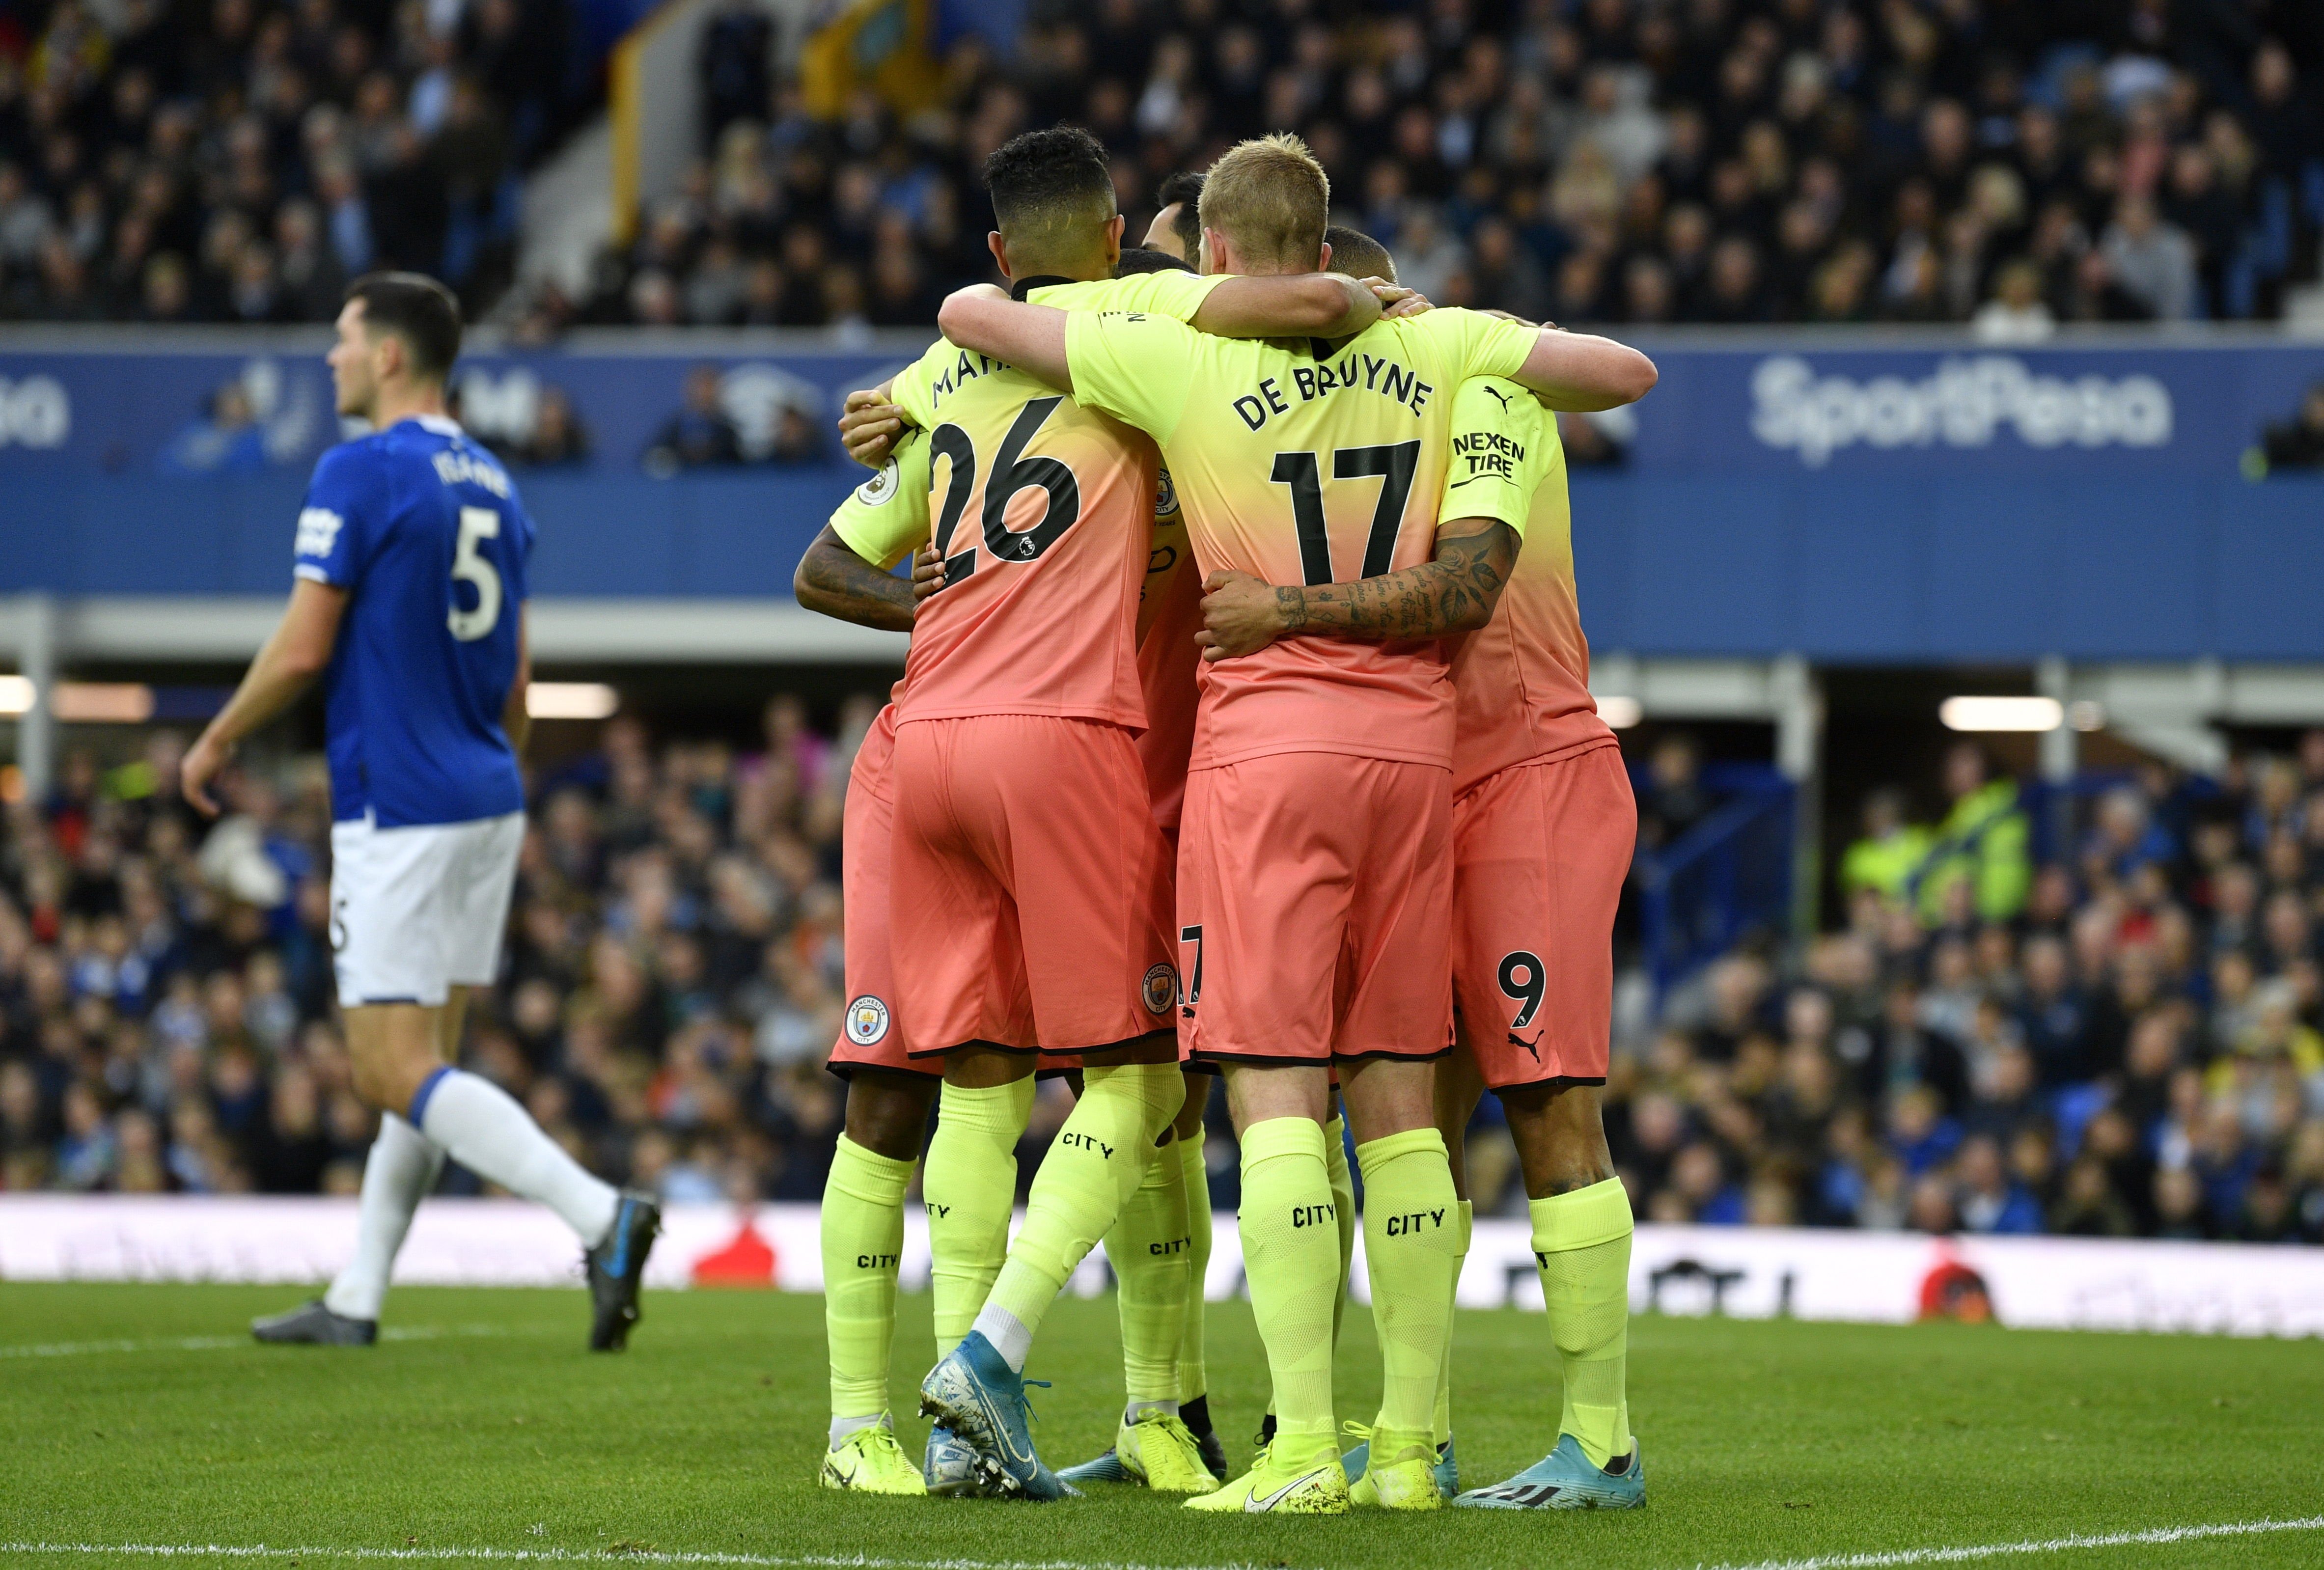 El Manchester City se salva del traspié contra el Everton (1-3)